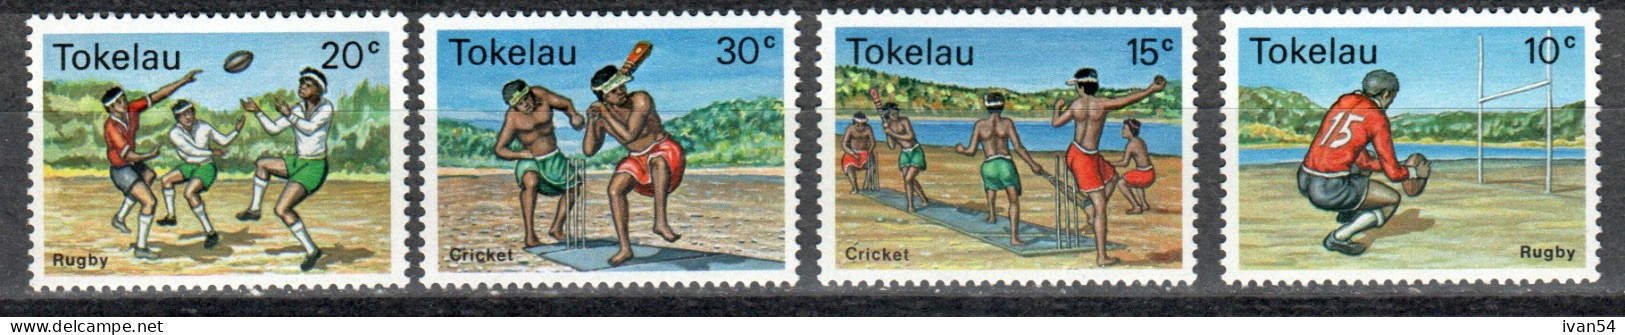 TOKELAU 69-72 **  MNH (1979) - Rugby - Cricket - Tokelau